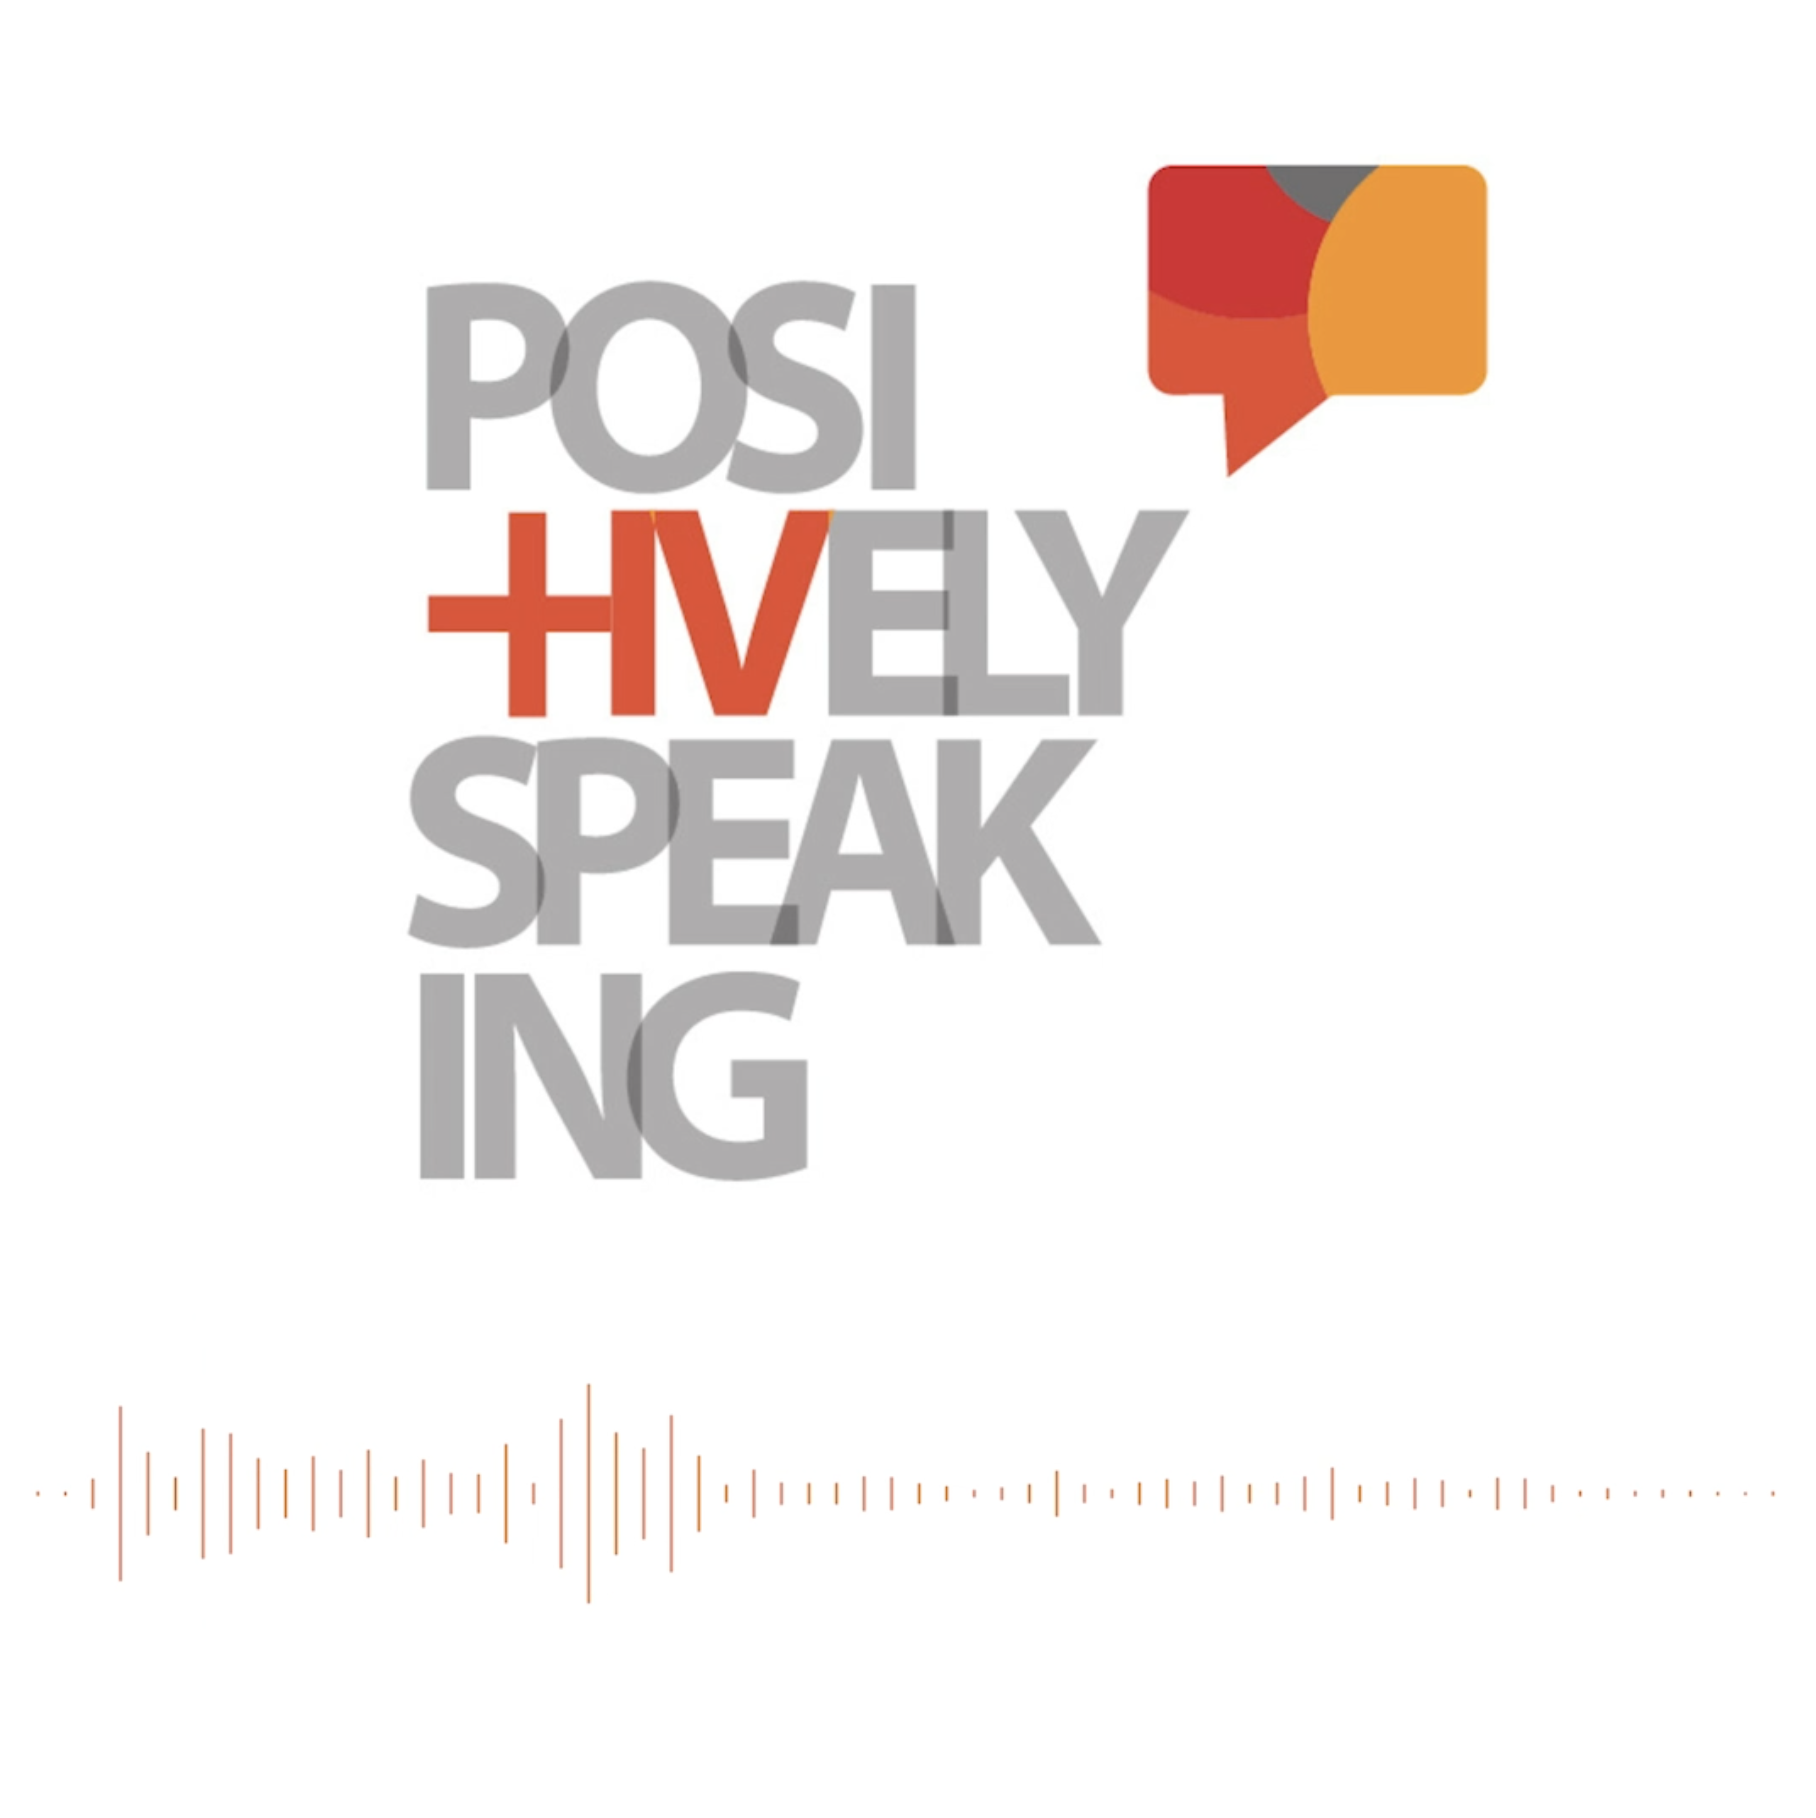 Positively Speaking (Podcast)